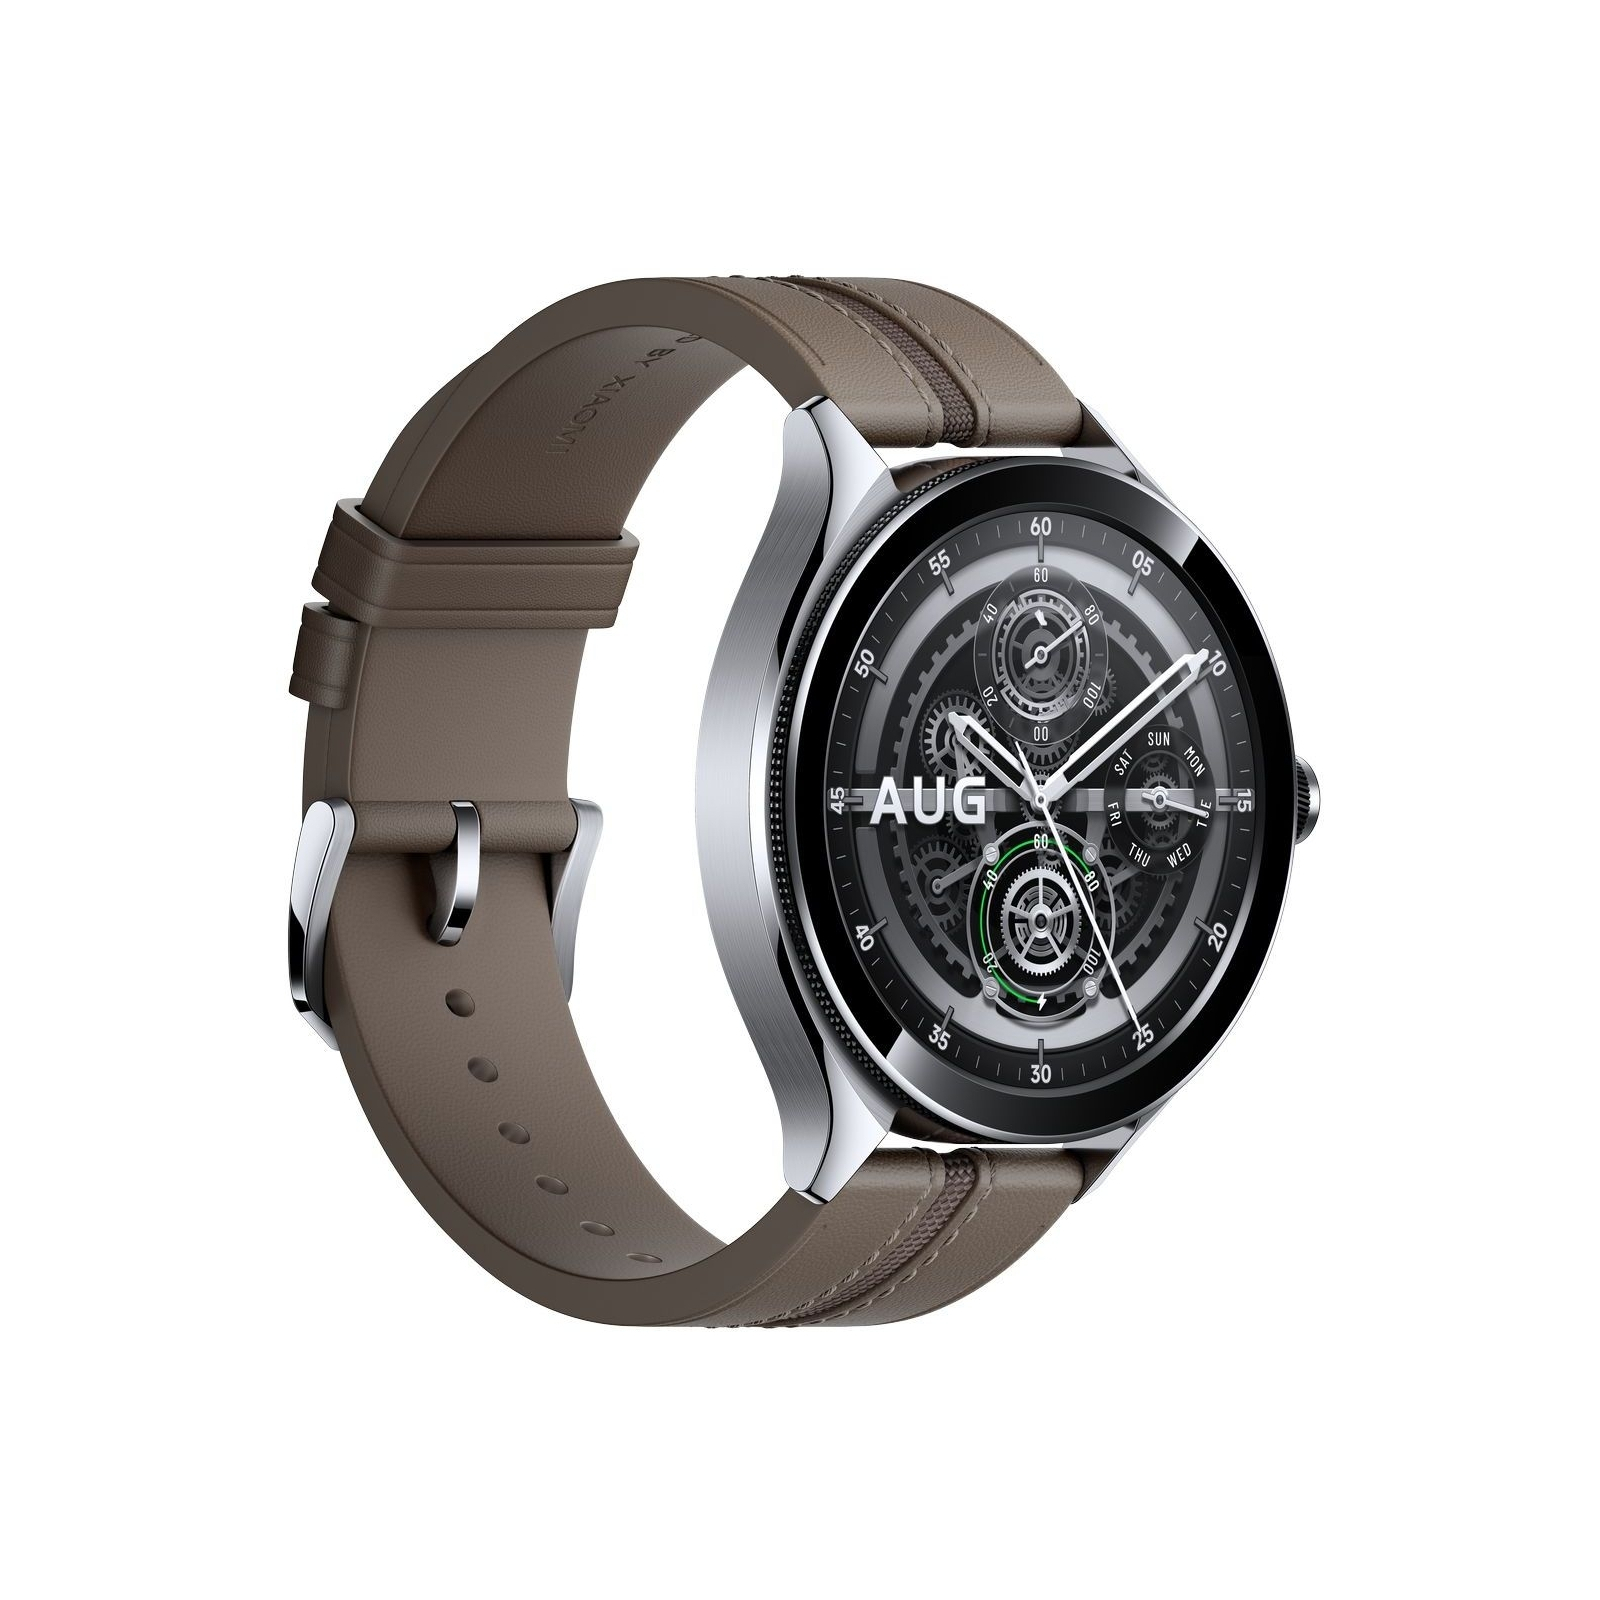 Смарт-часы Xiaomi Watch 2 Pro Bluetooth Black Case with Black Fluororubber Str (1006732) изображение 3